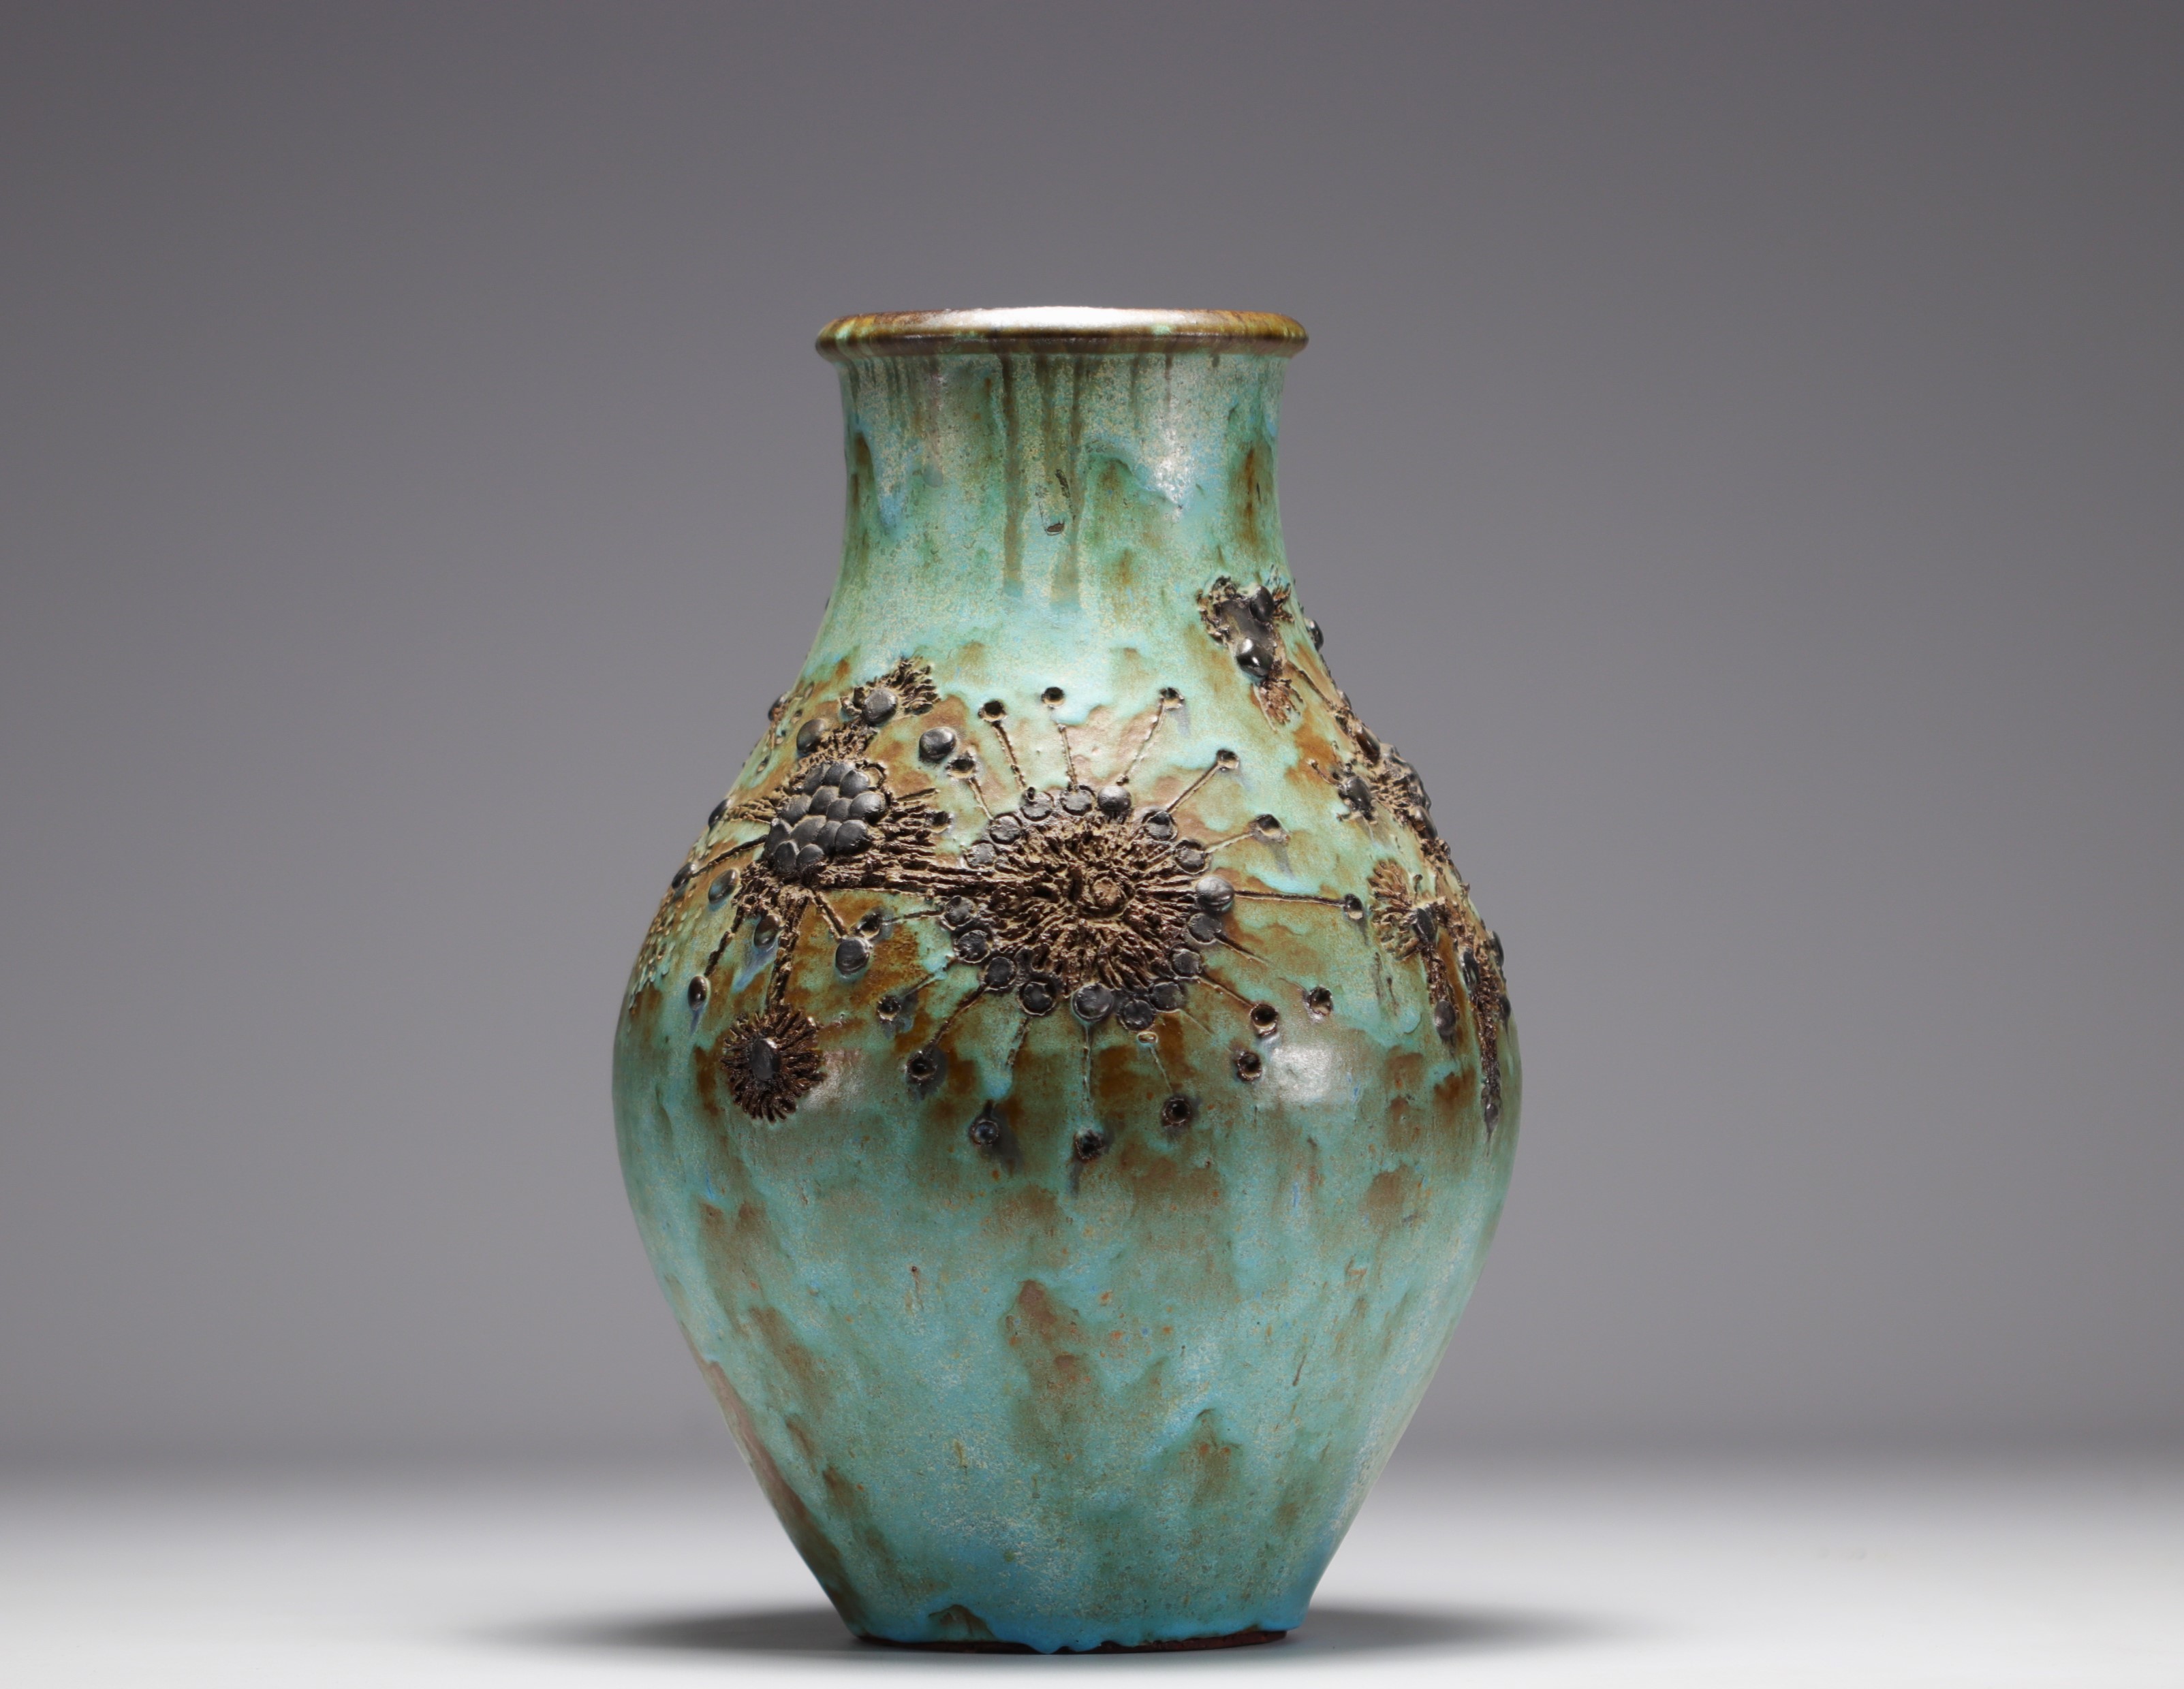 Jerome VANDEWEGHE Atelier Perignem Aphora - Glazed ceramic vase.